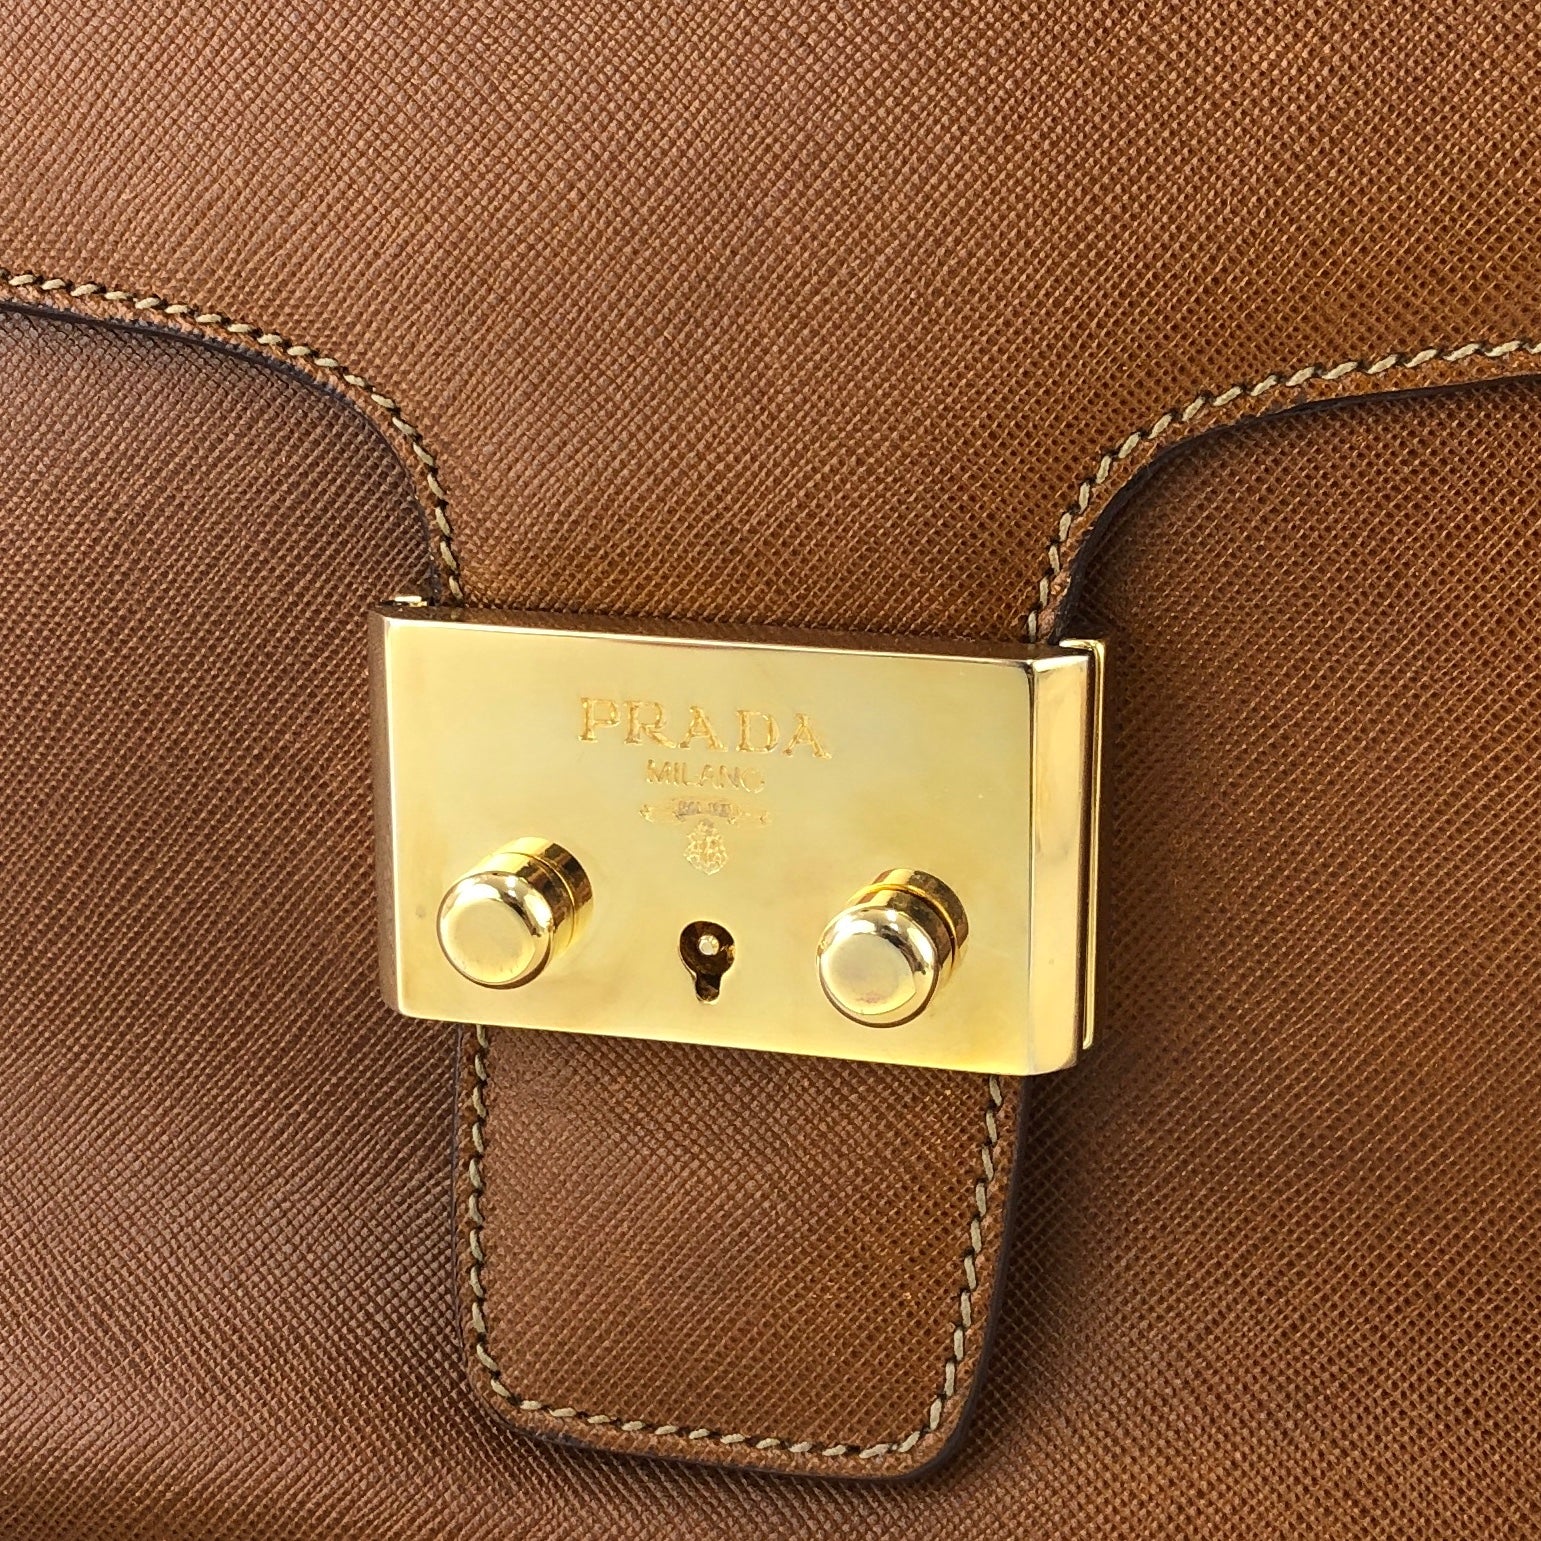 Prada Saffiano Leather Top Handle Bag